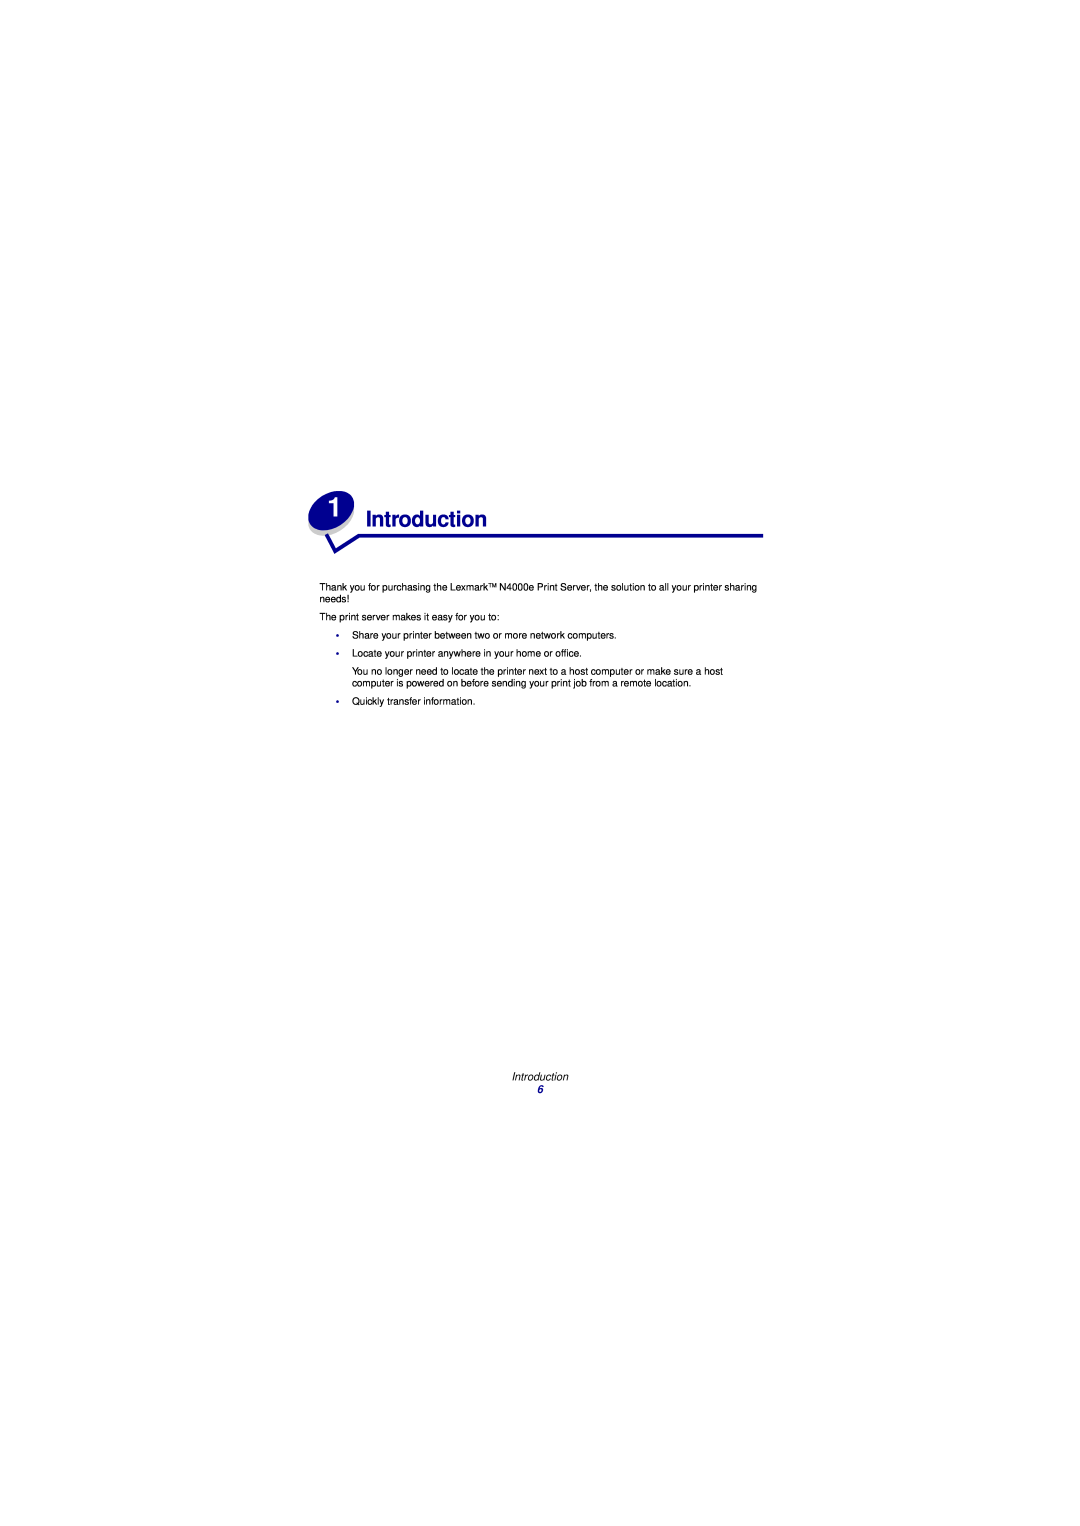 Lexmark N4000e manual Introduction 